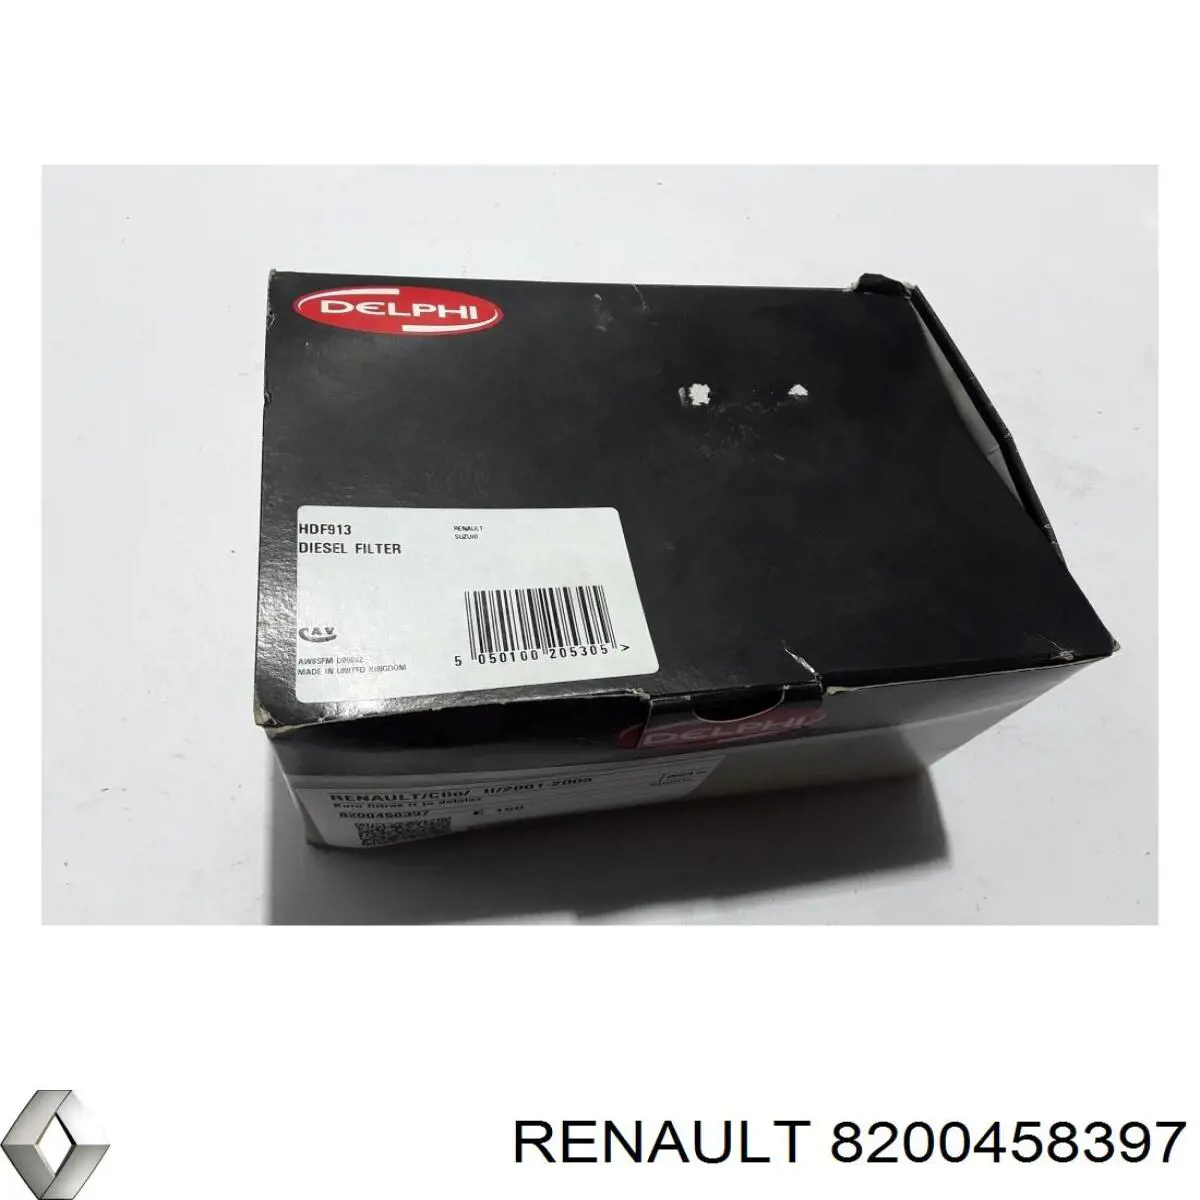 8200458397 Renault (RVI) filtro de combustible